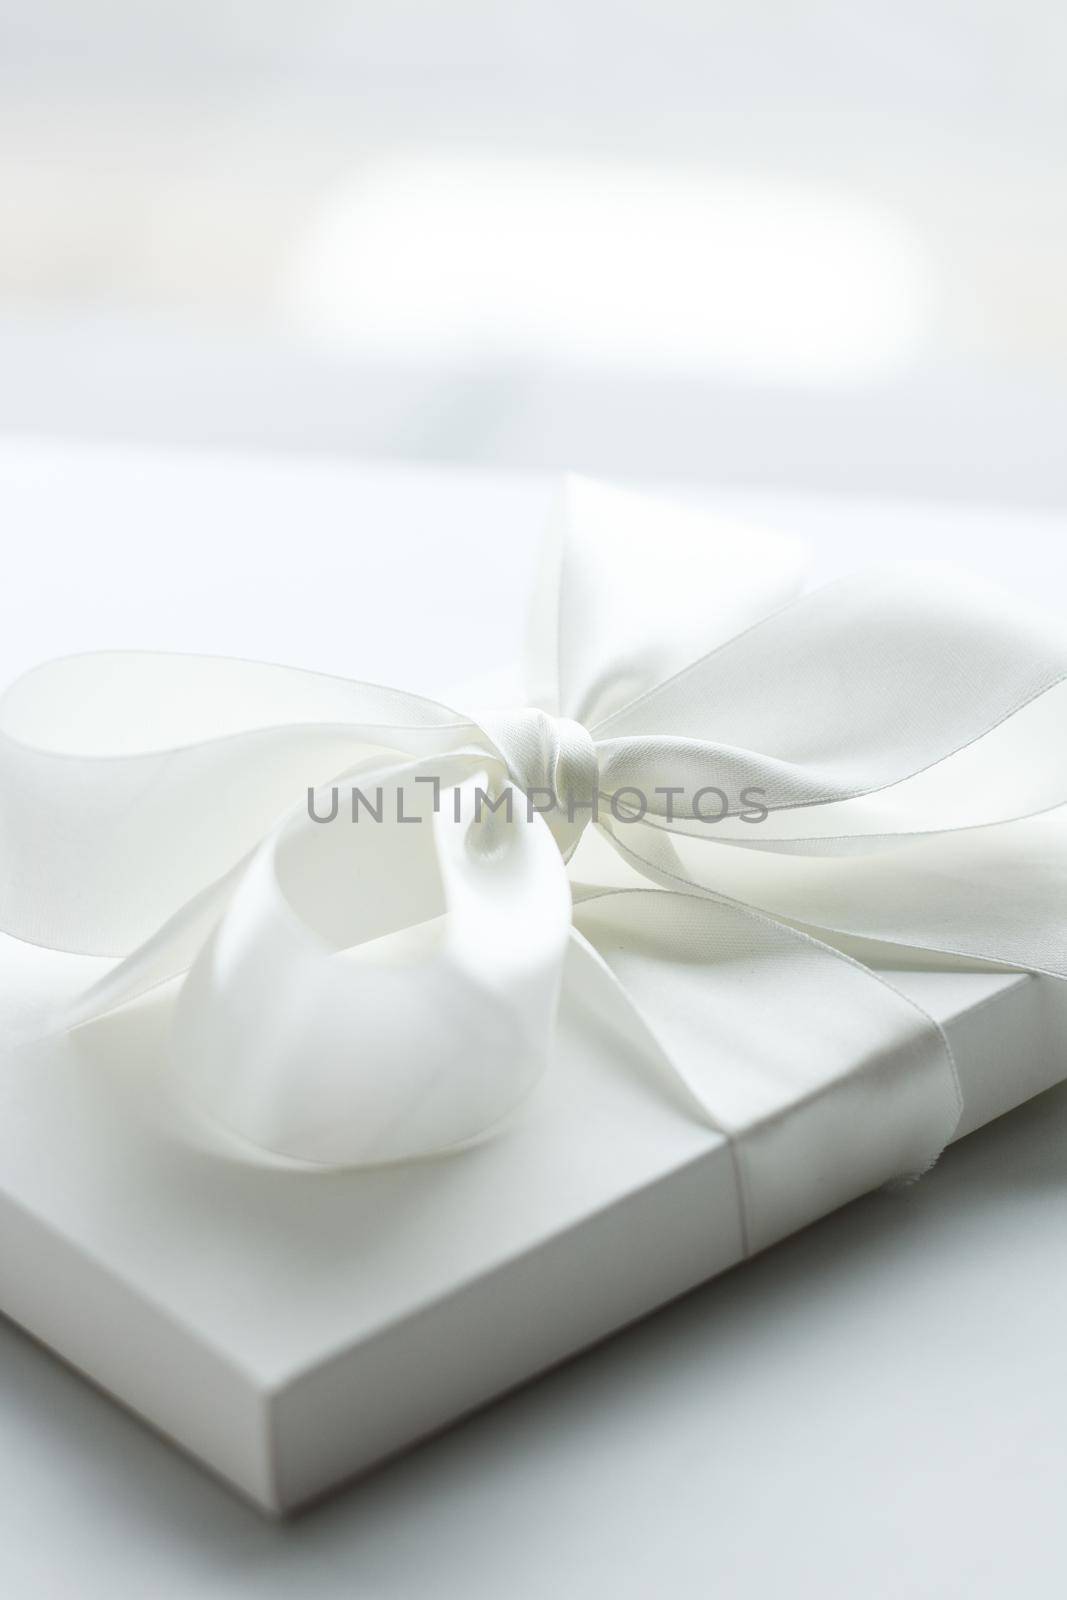 Romantic celebration, lifestyle and birthday present concept - Luxury holiday gift box